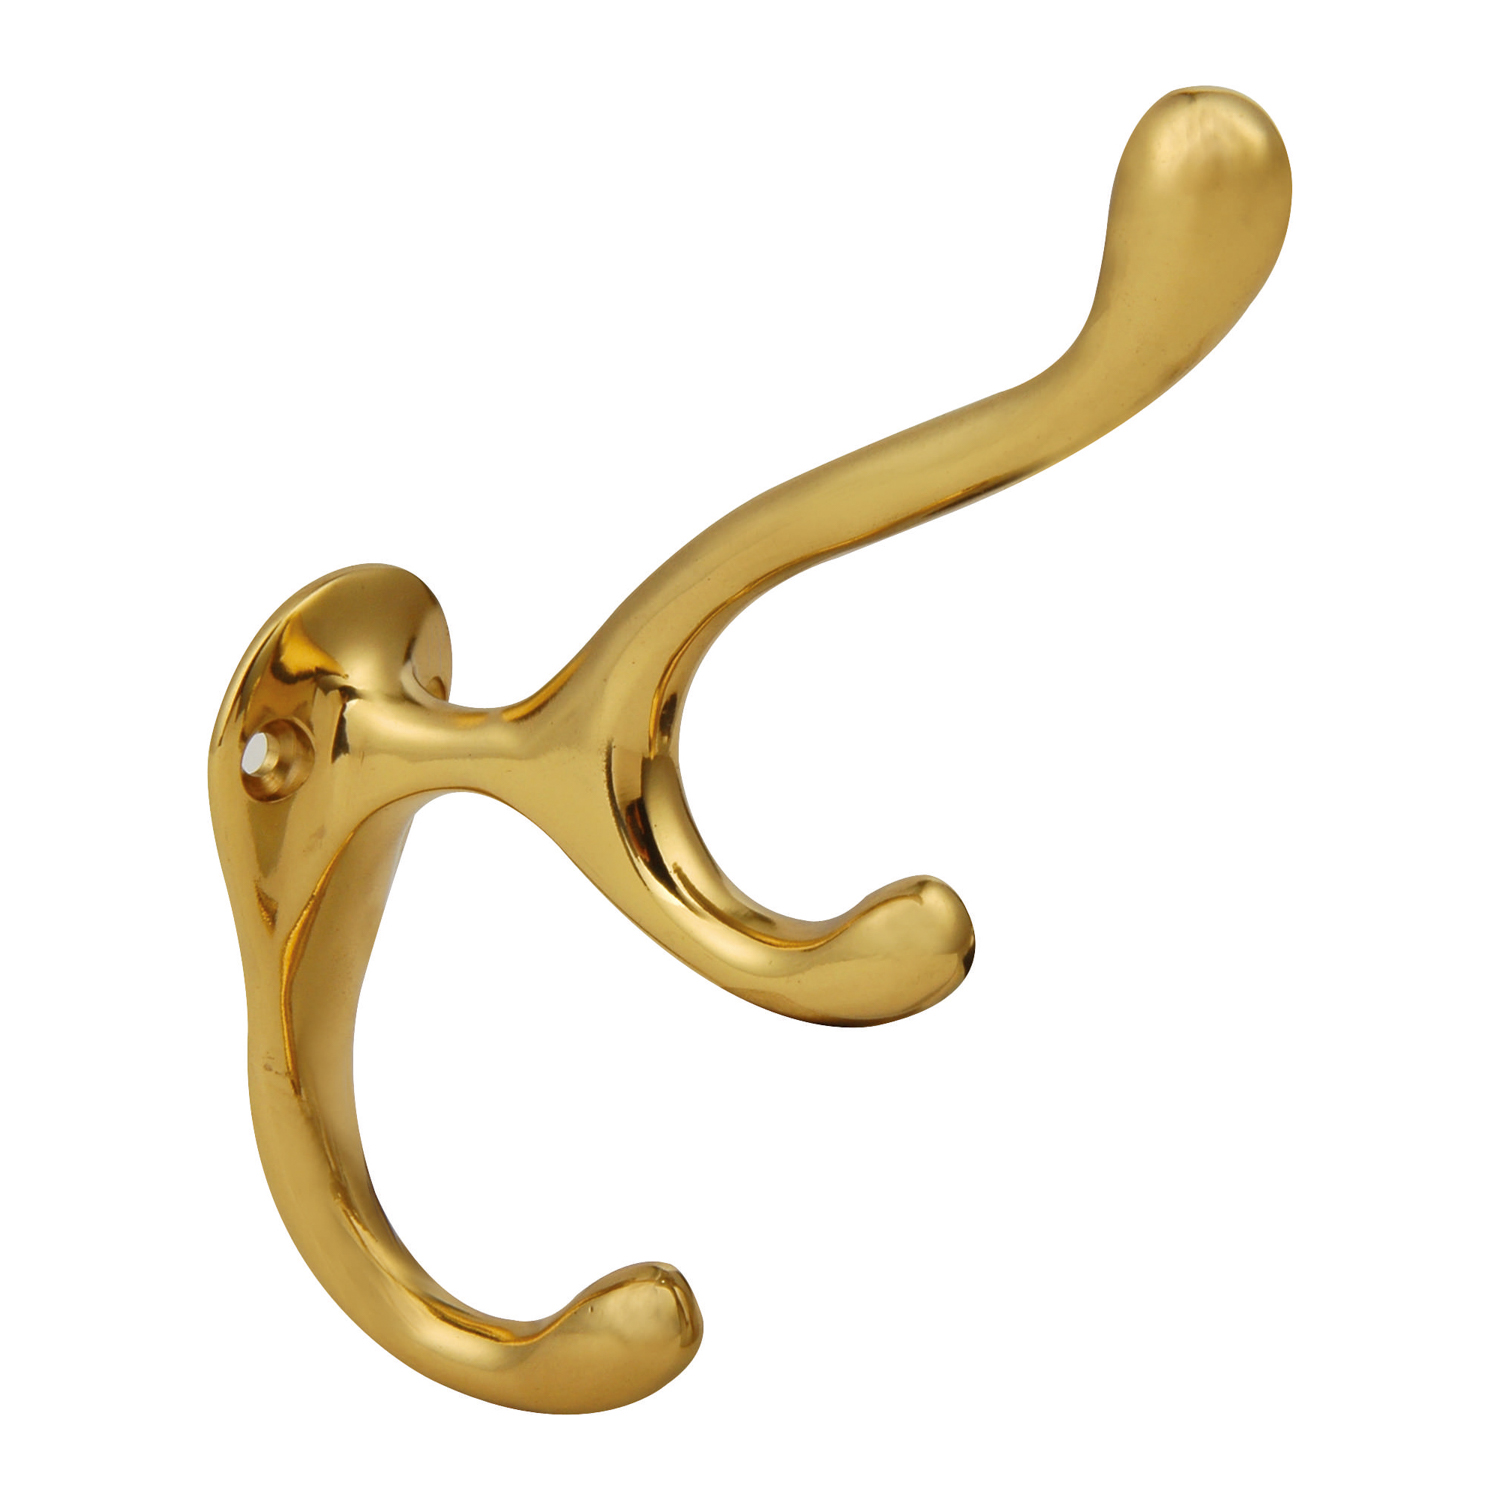 Wall-Mounted Brass Bathroom Hook Bathroom Accessories